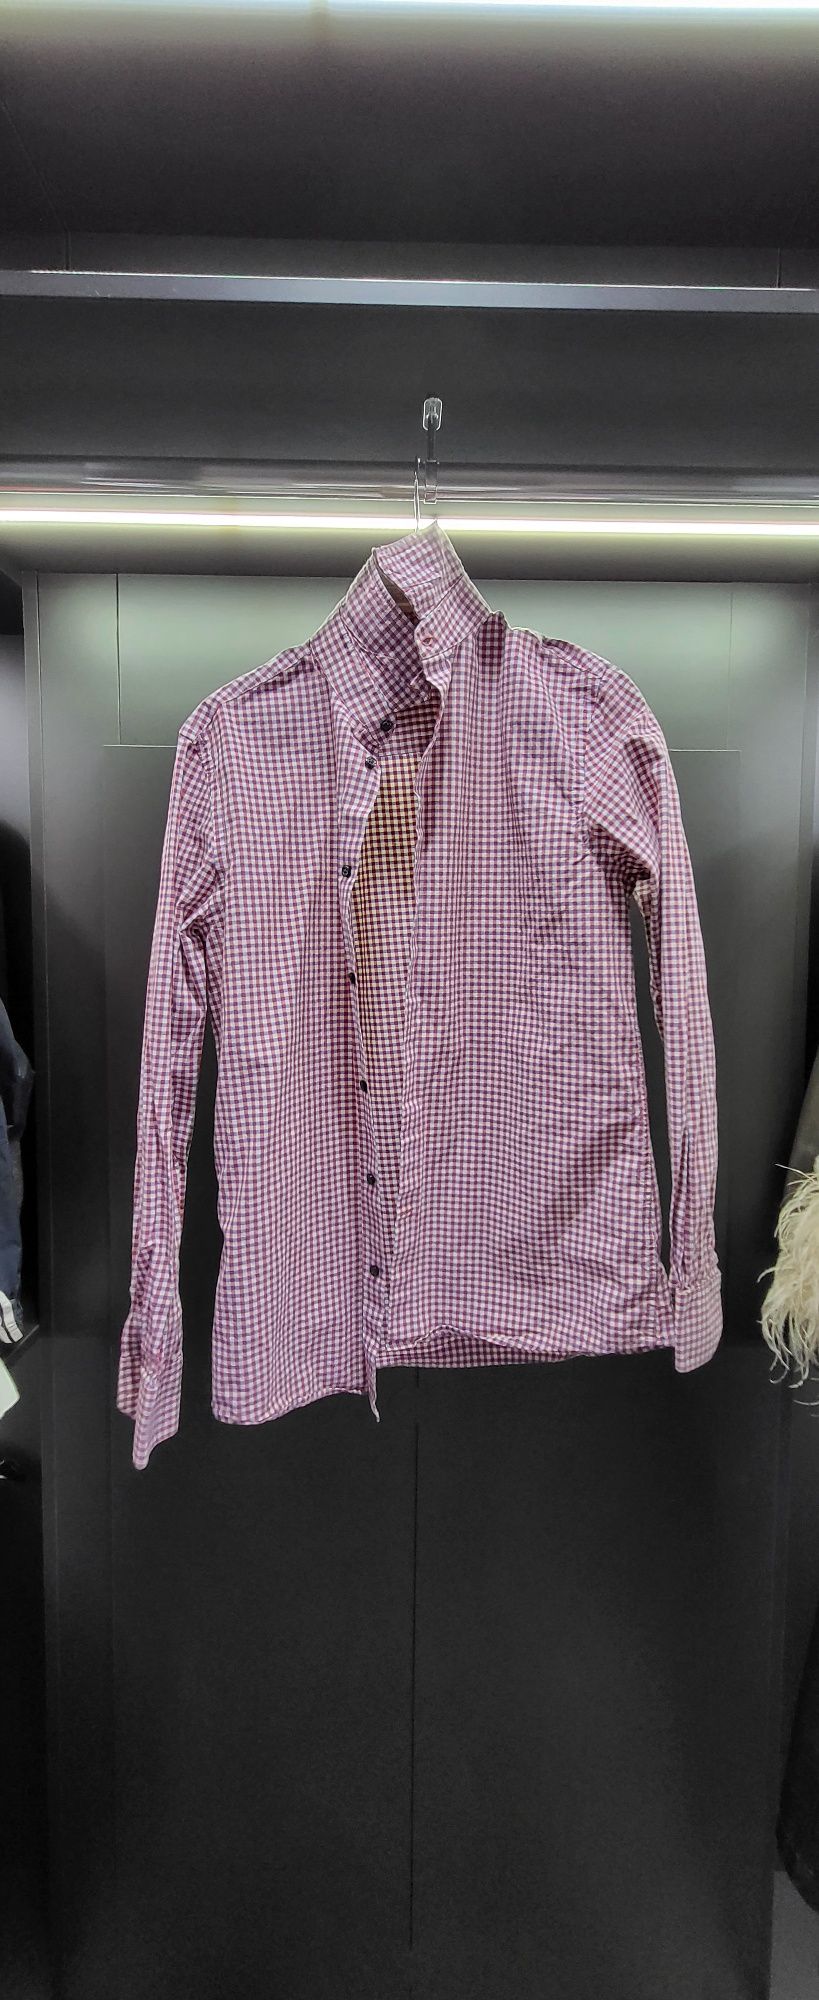 Ризи Lacoste, Polo by Ralph Lauren, HM